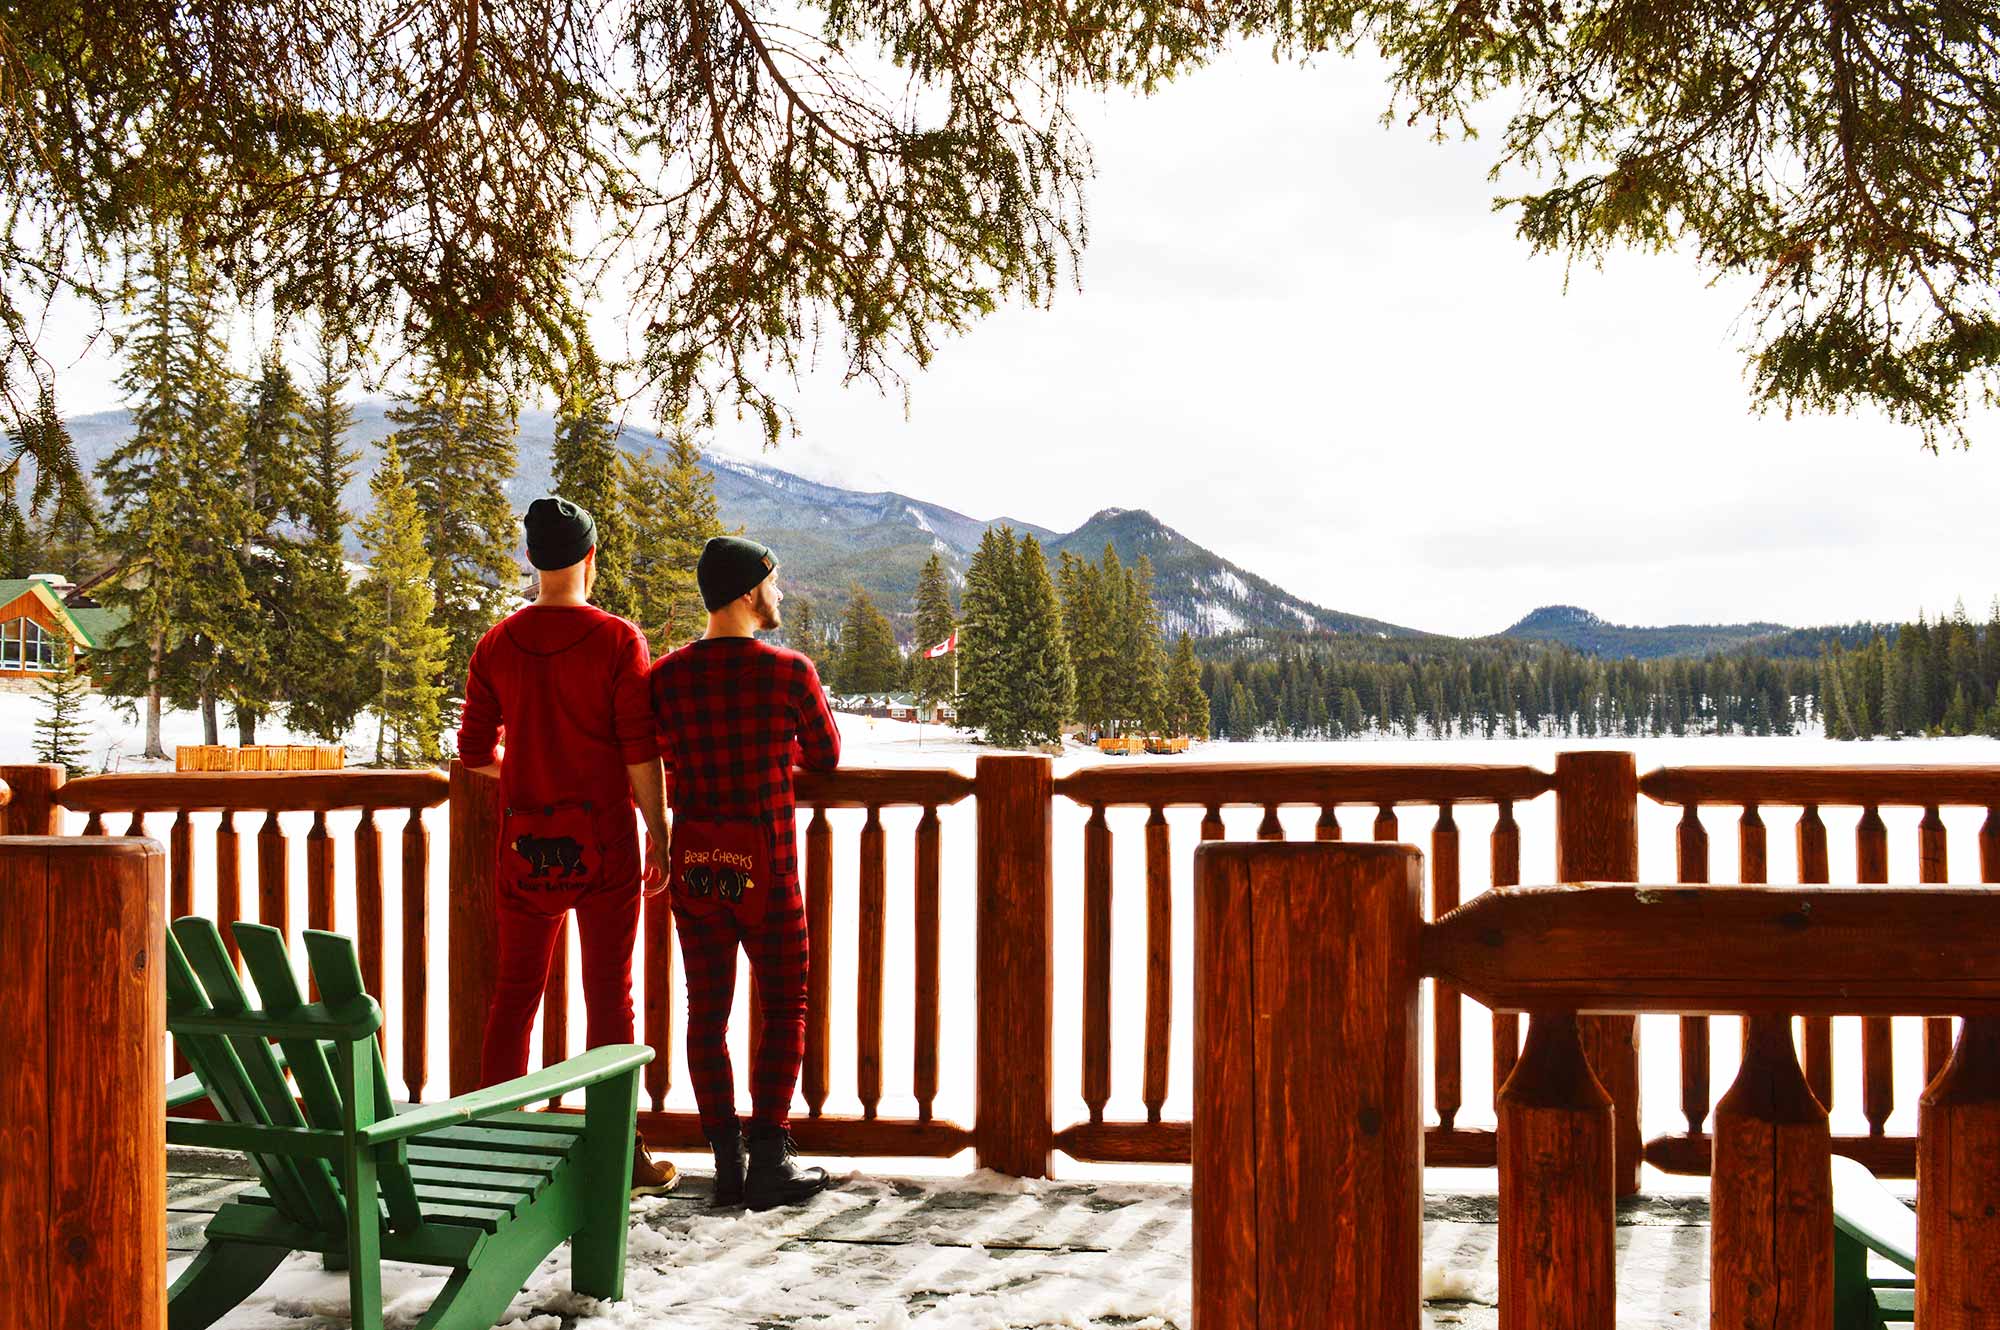 Fairmont Jasper Park Lodge: The Legendary Rocky Mountain Hotel